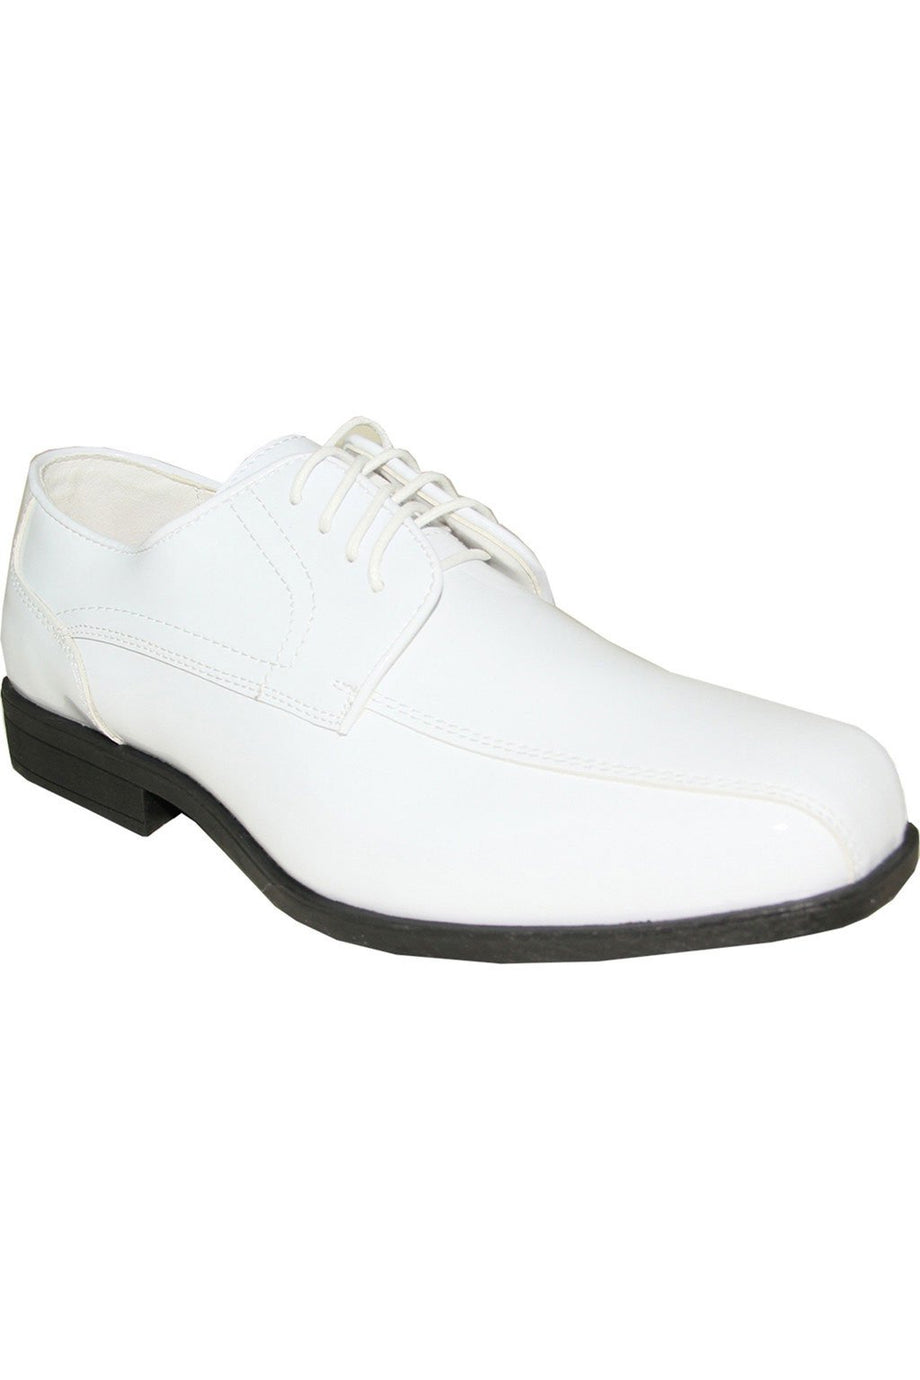 Jean Yves "Lawrence" White Jean Yves Tuxedo Shoes